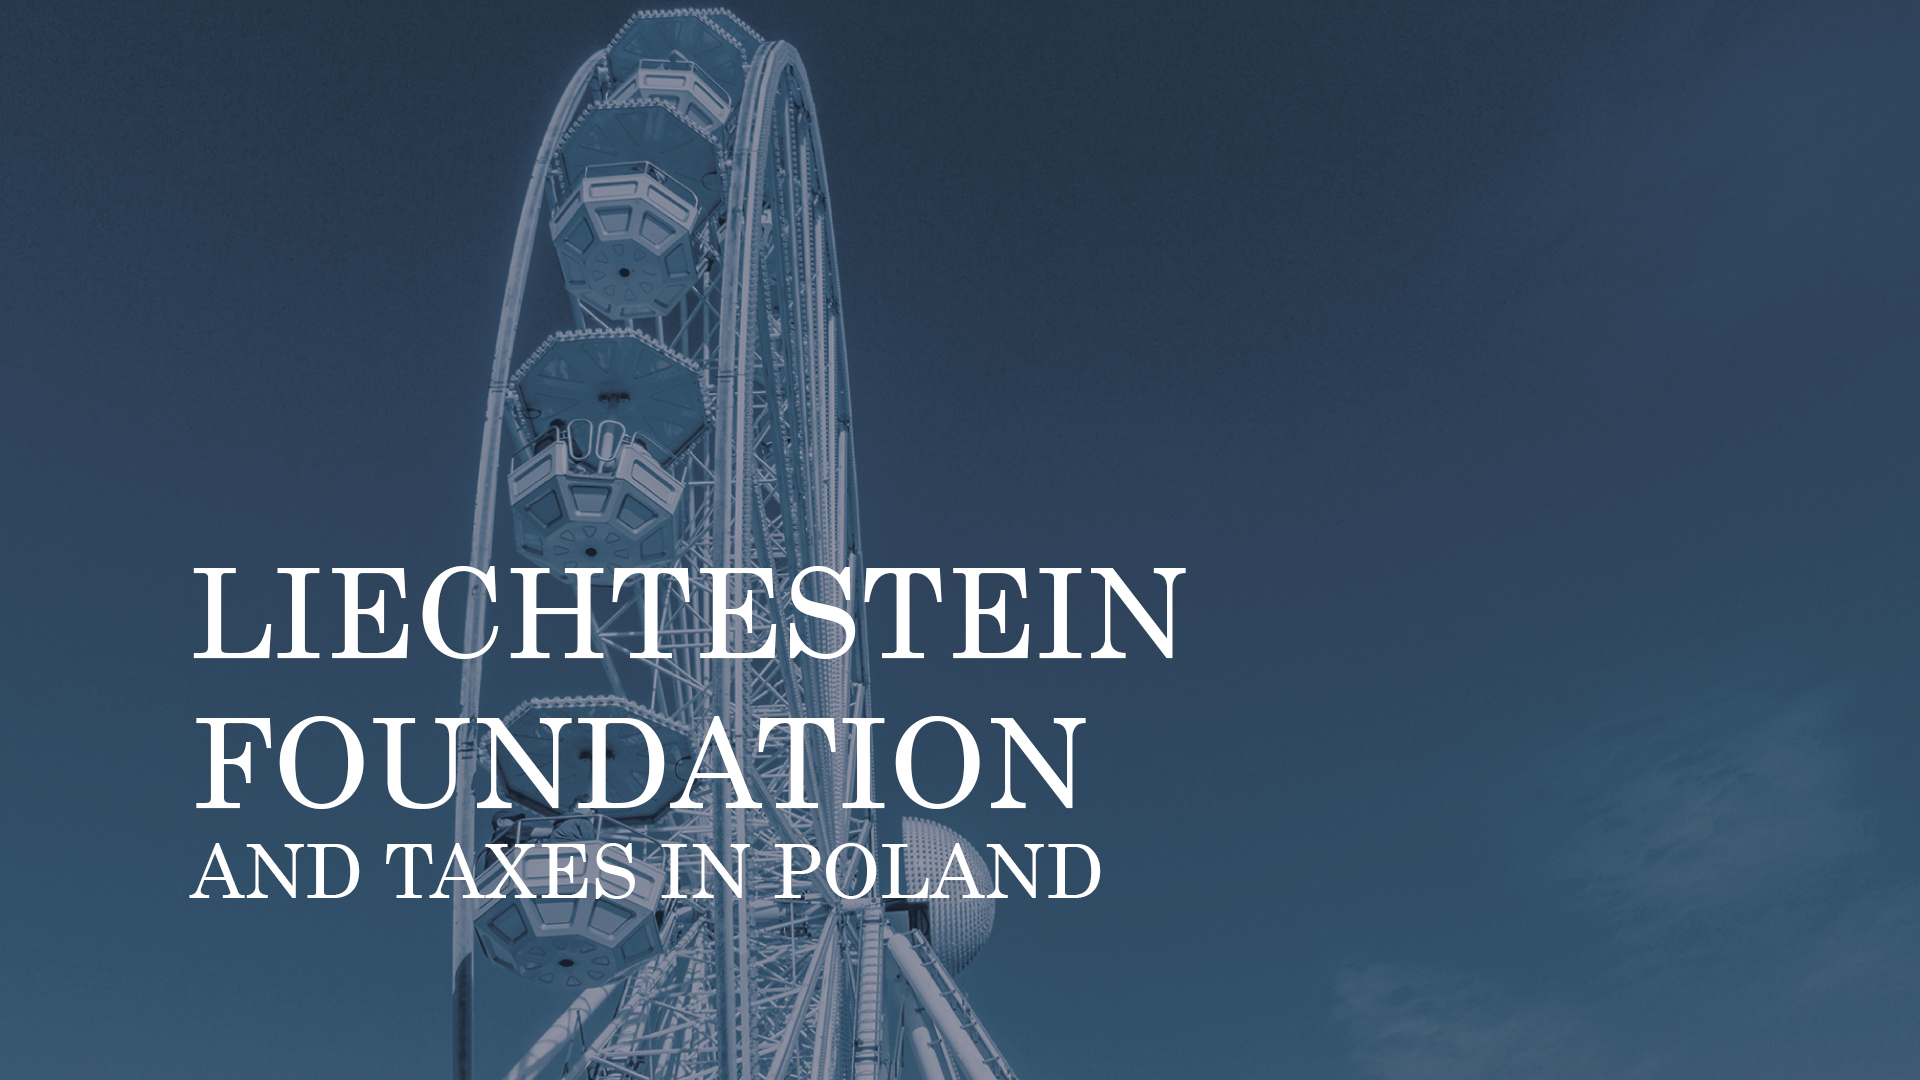 LIECHTESTEIN FOUNDATION AND TAXES IN POLAND